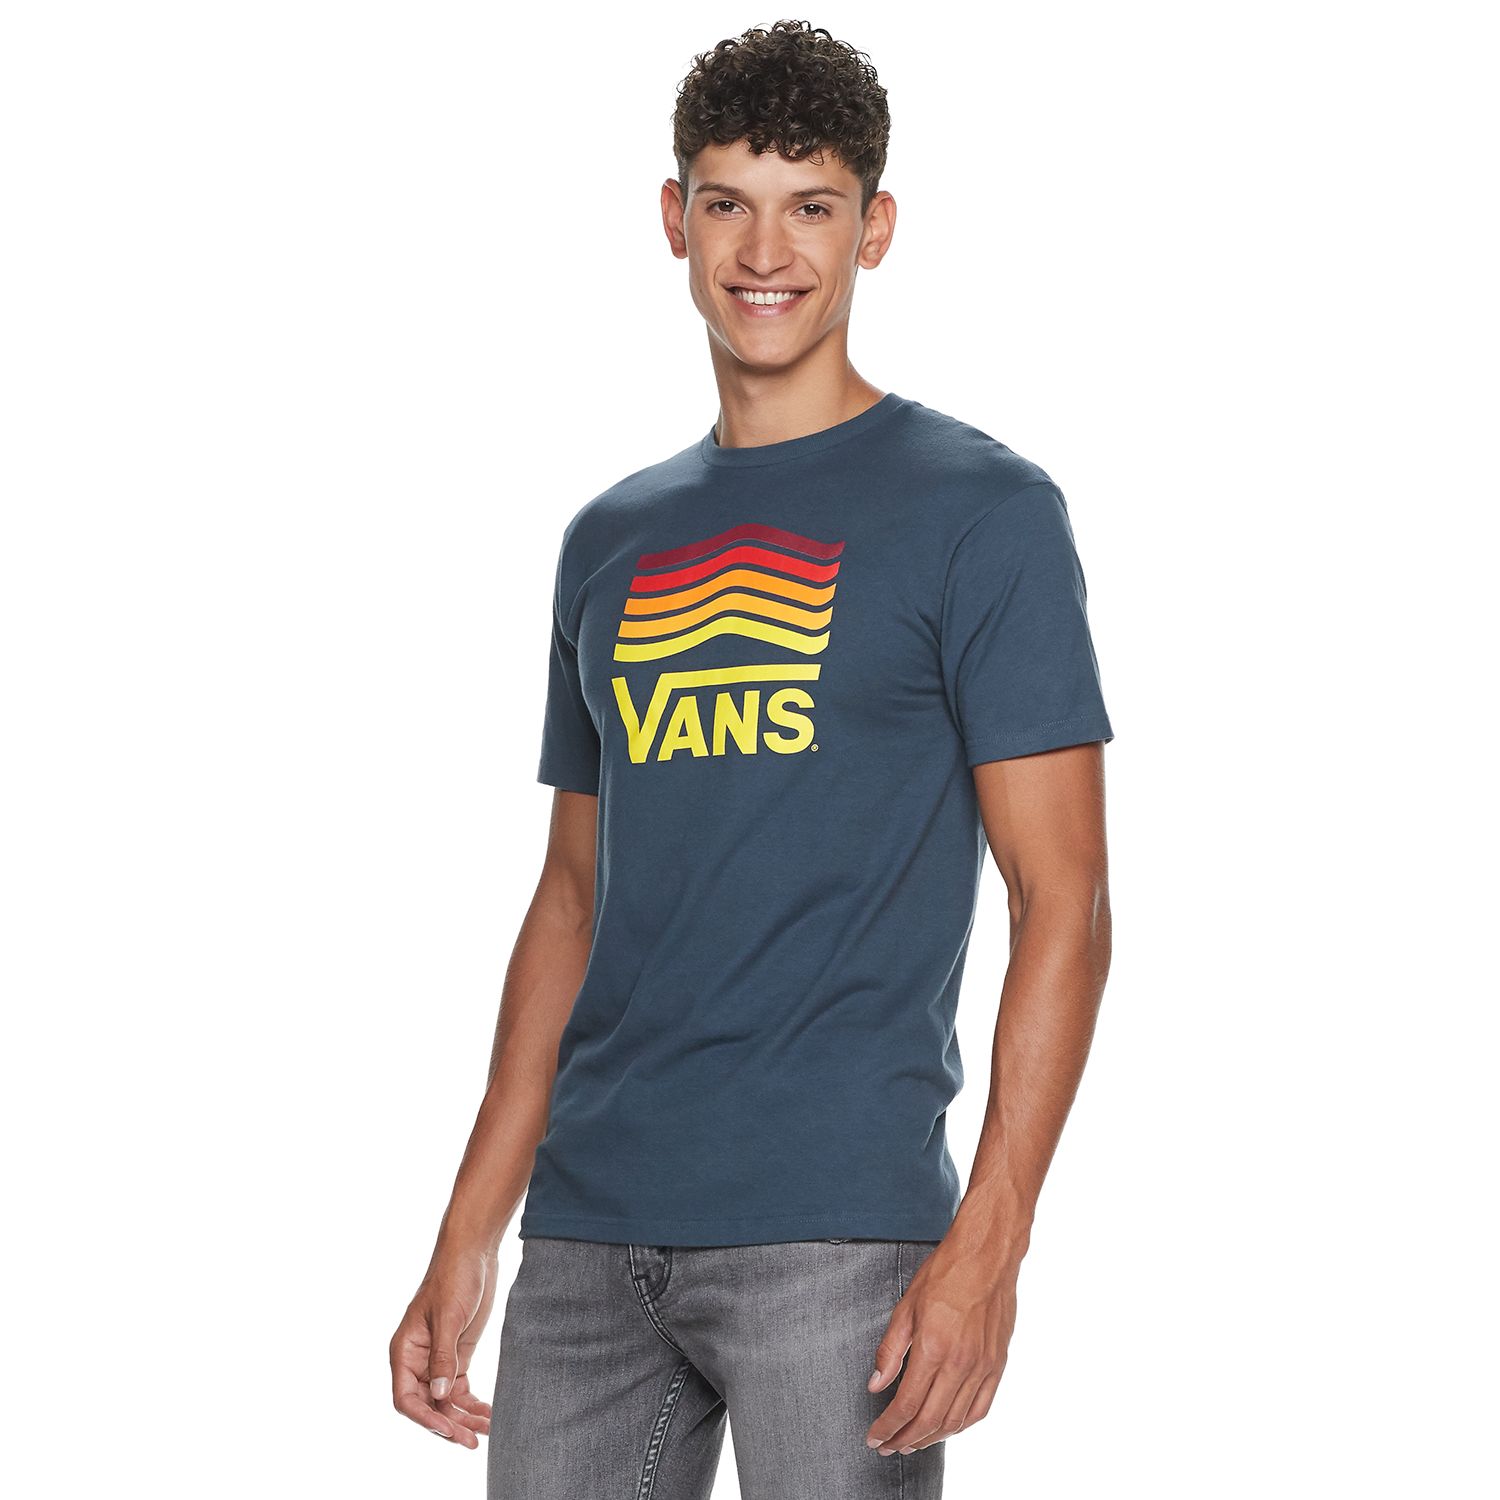 Vans Clothing: Shop Vans Logo Shirts 